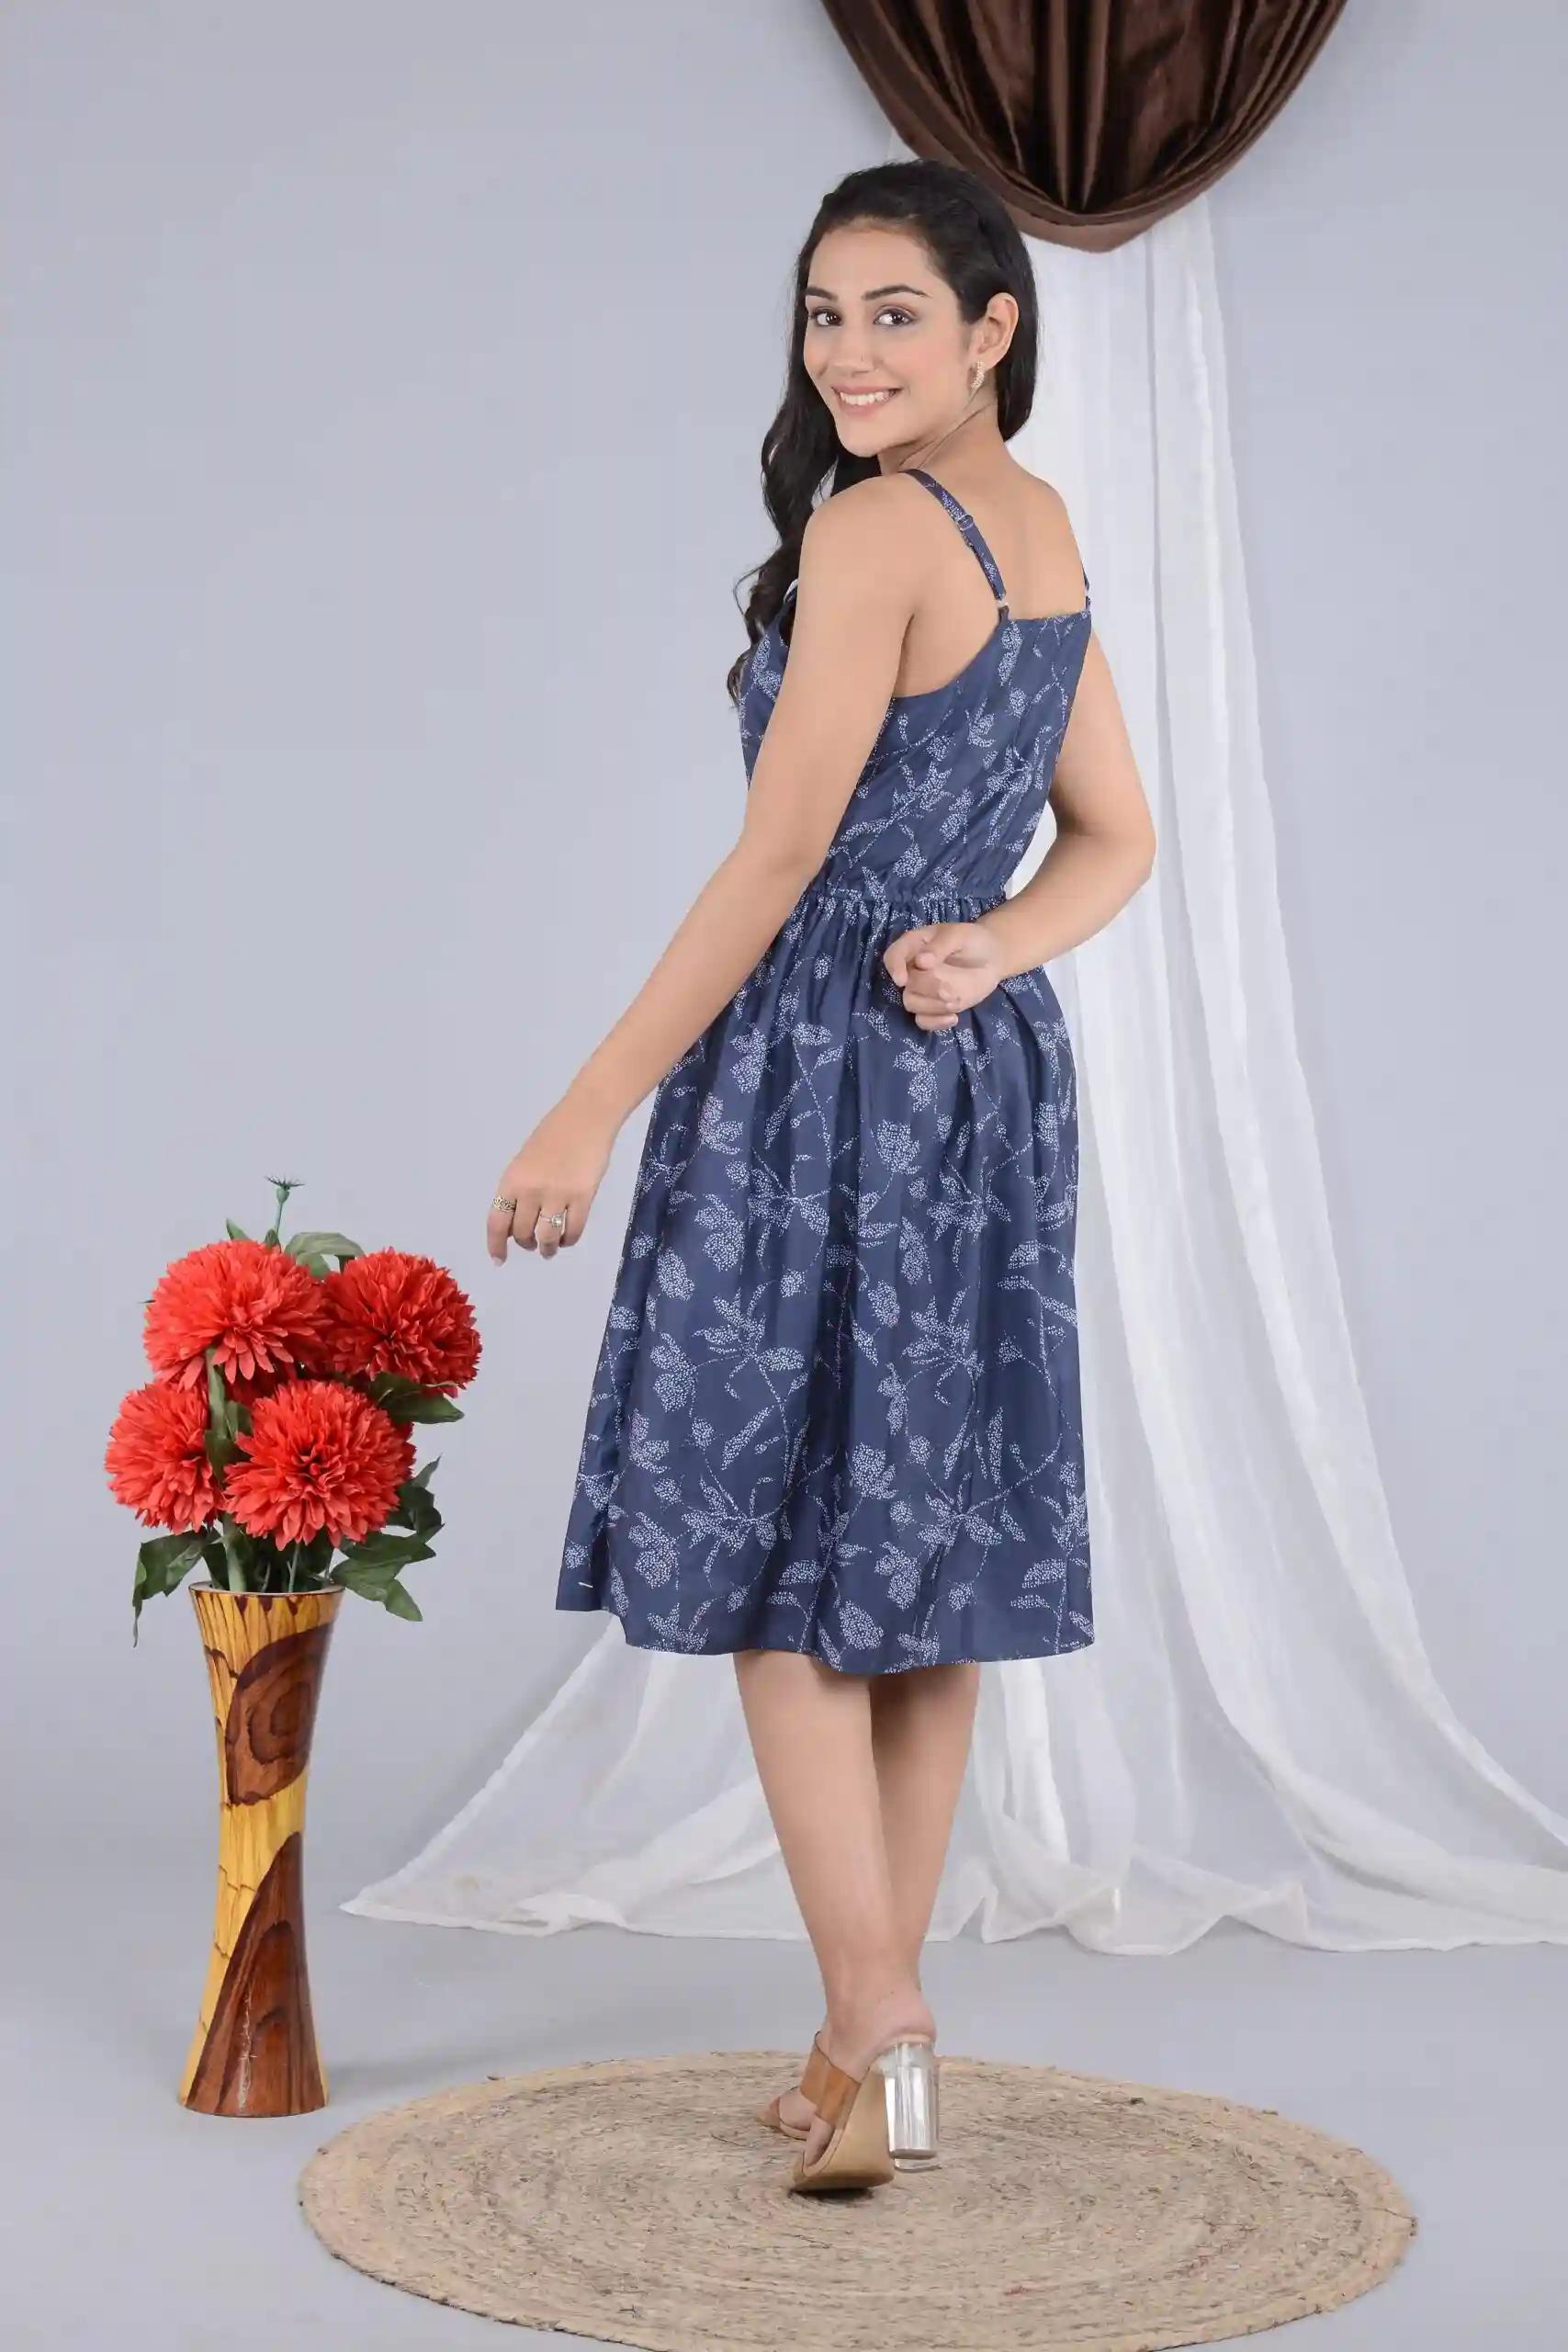 Floral Print Blue Strap Dress for Women